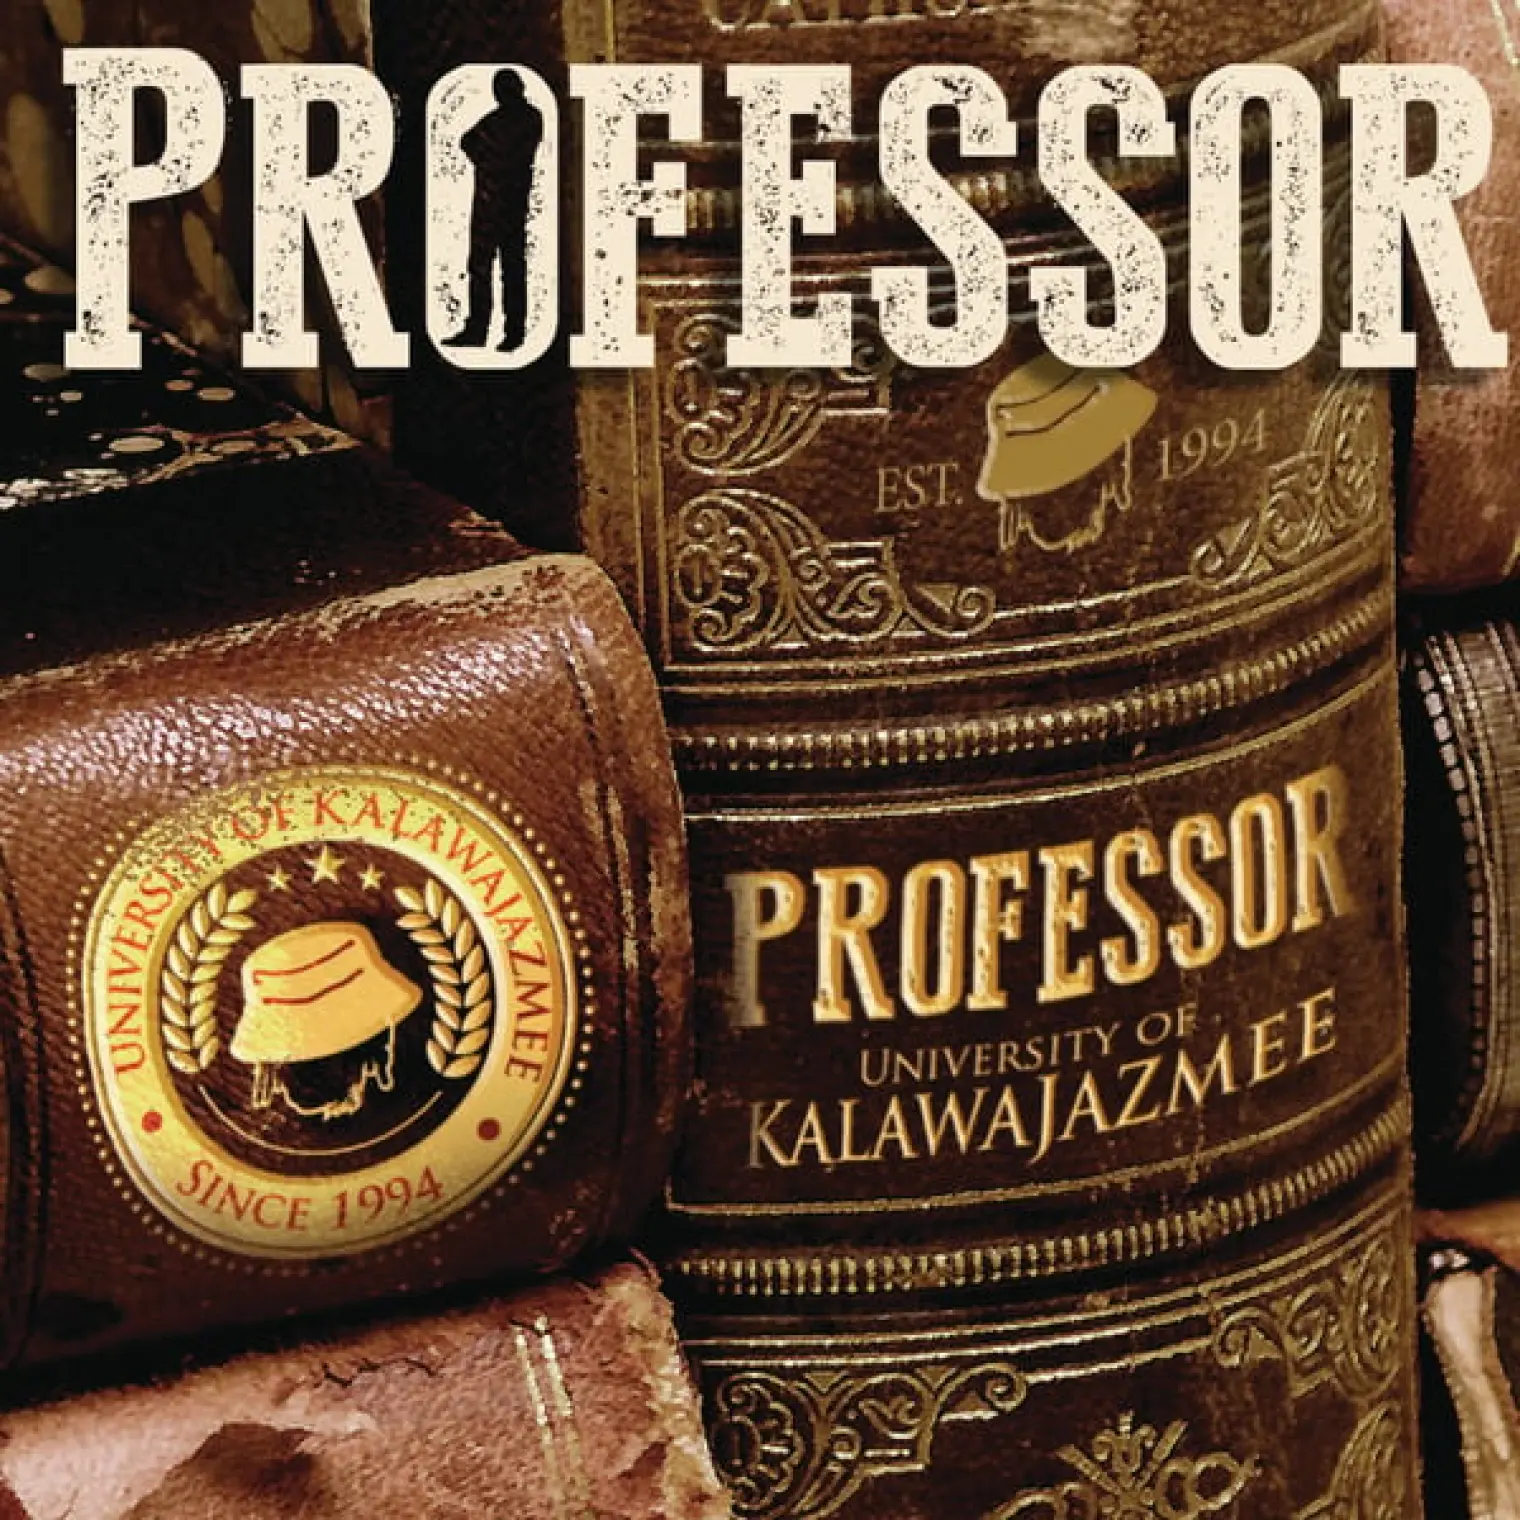 University Of Kalawa Jazmee Since 1994 -  Professor 